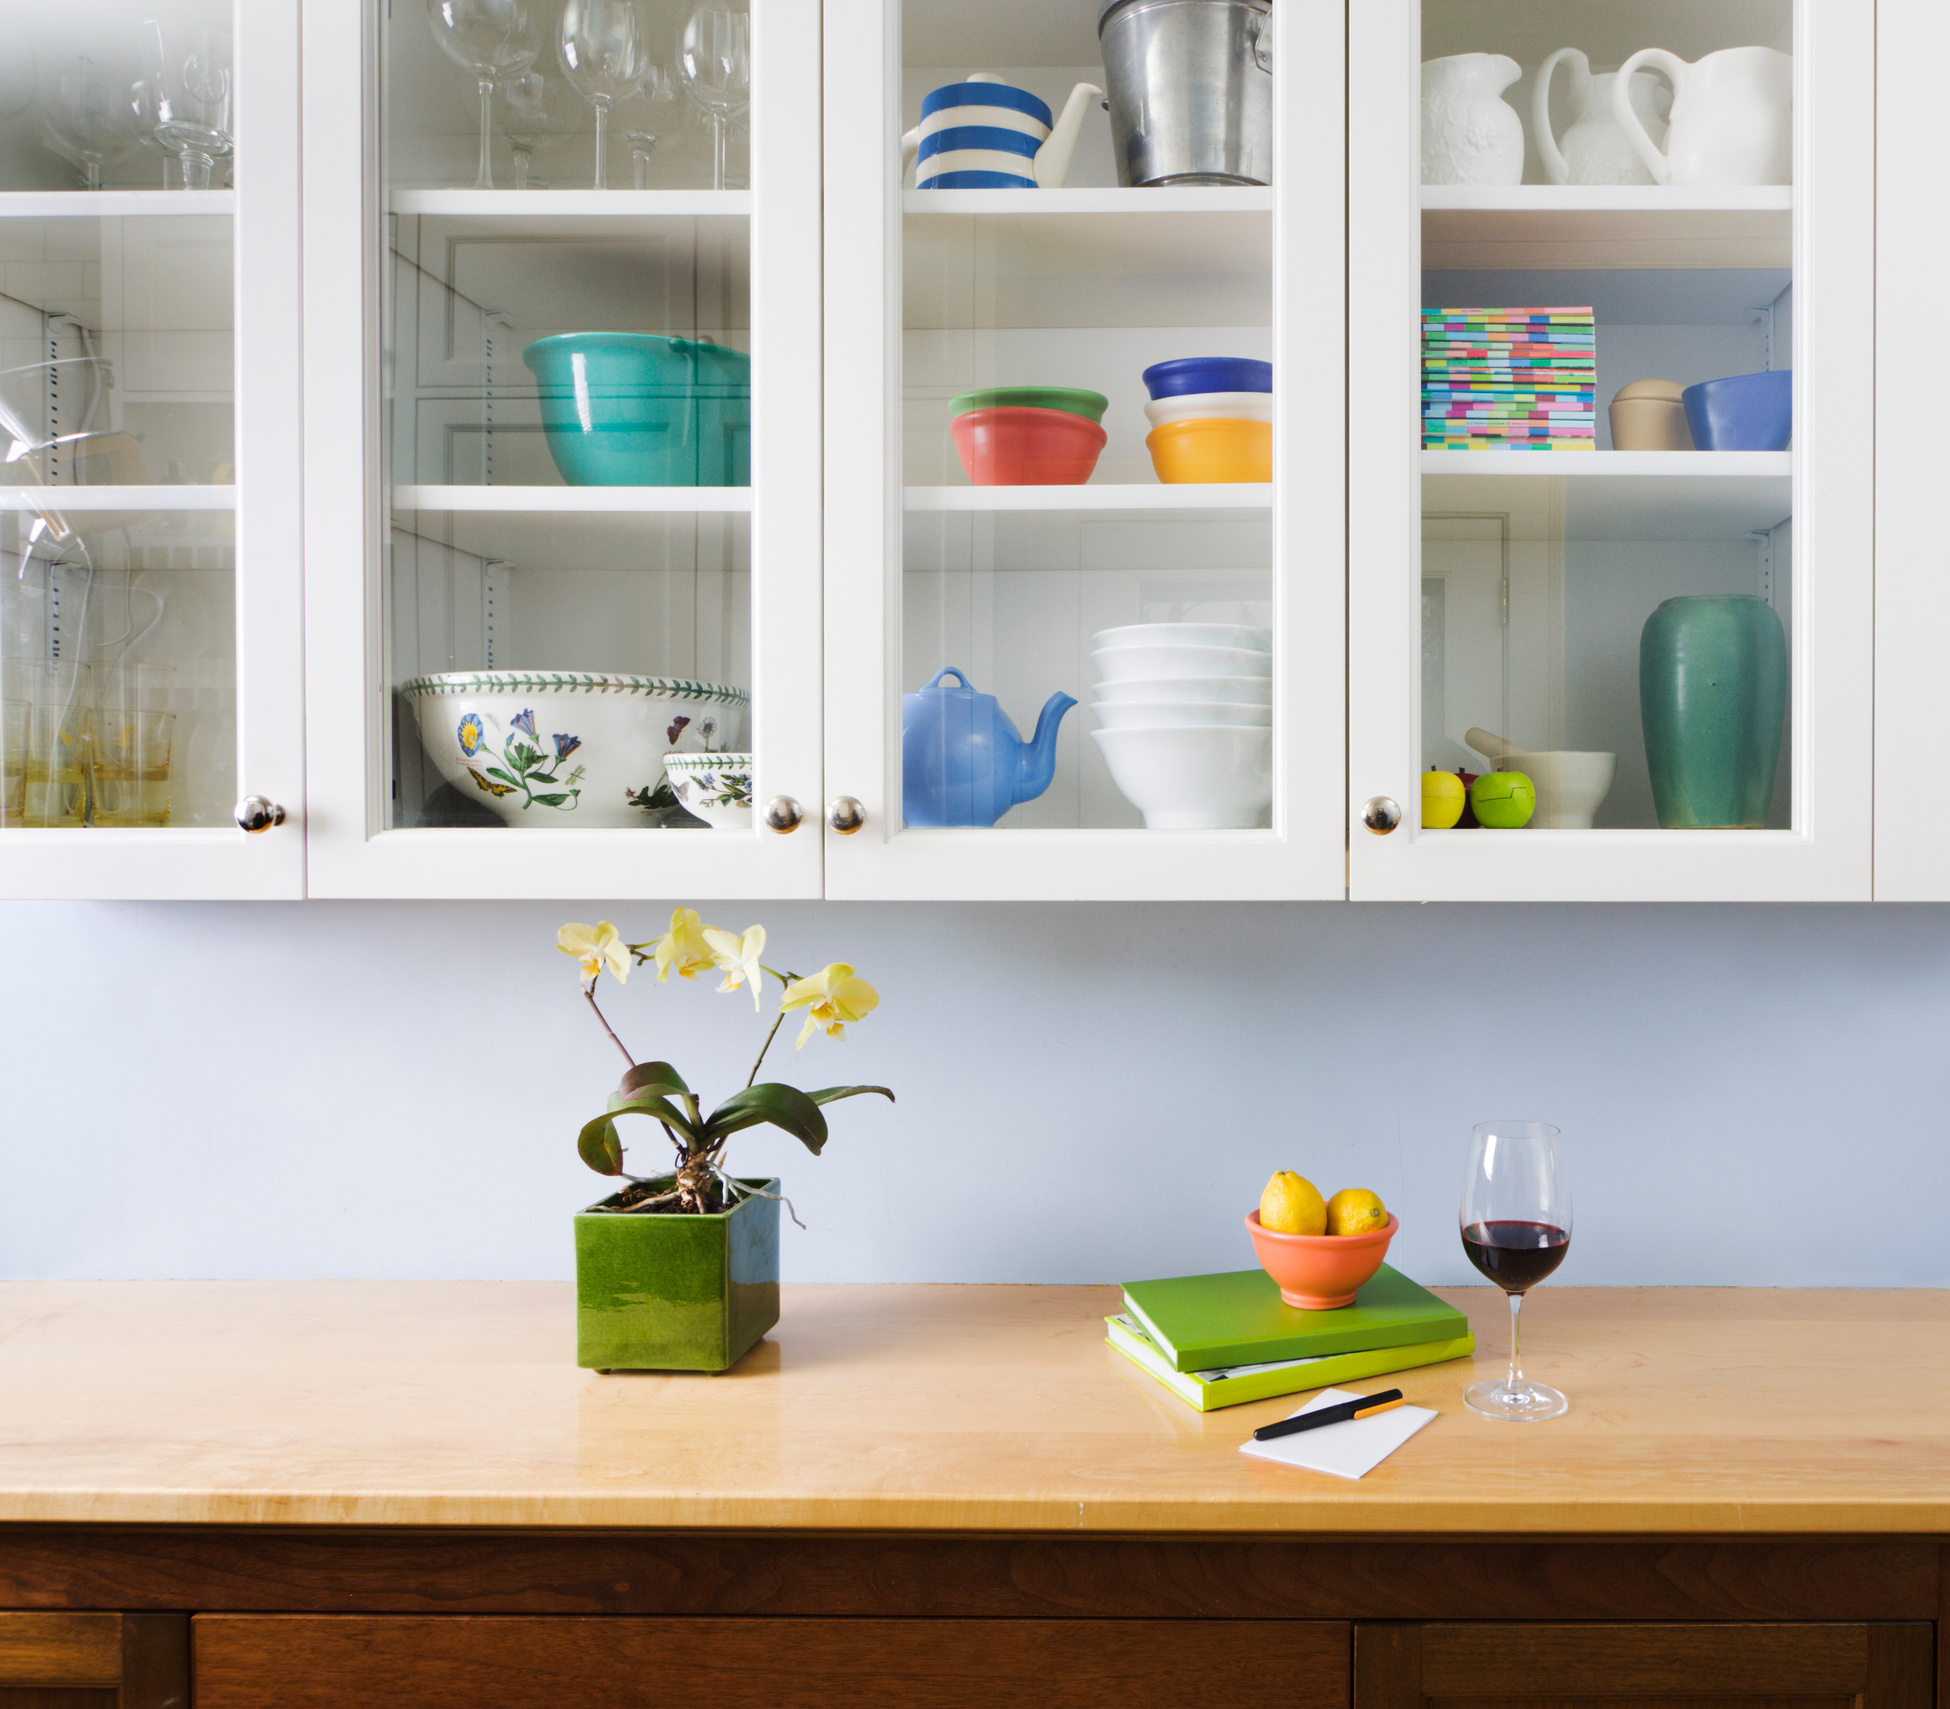 Kitchen Organization, Counter and Cabinet in Home Interior Design